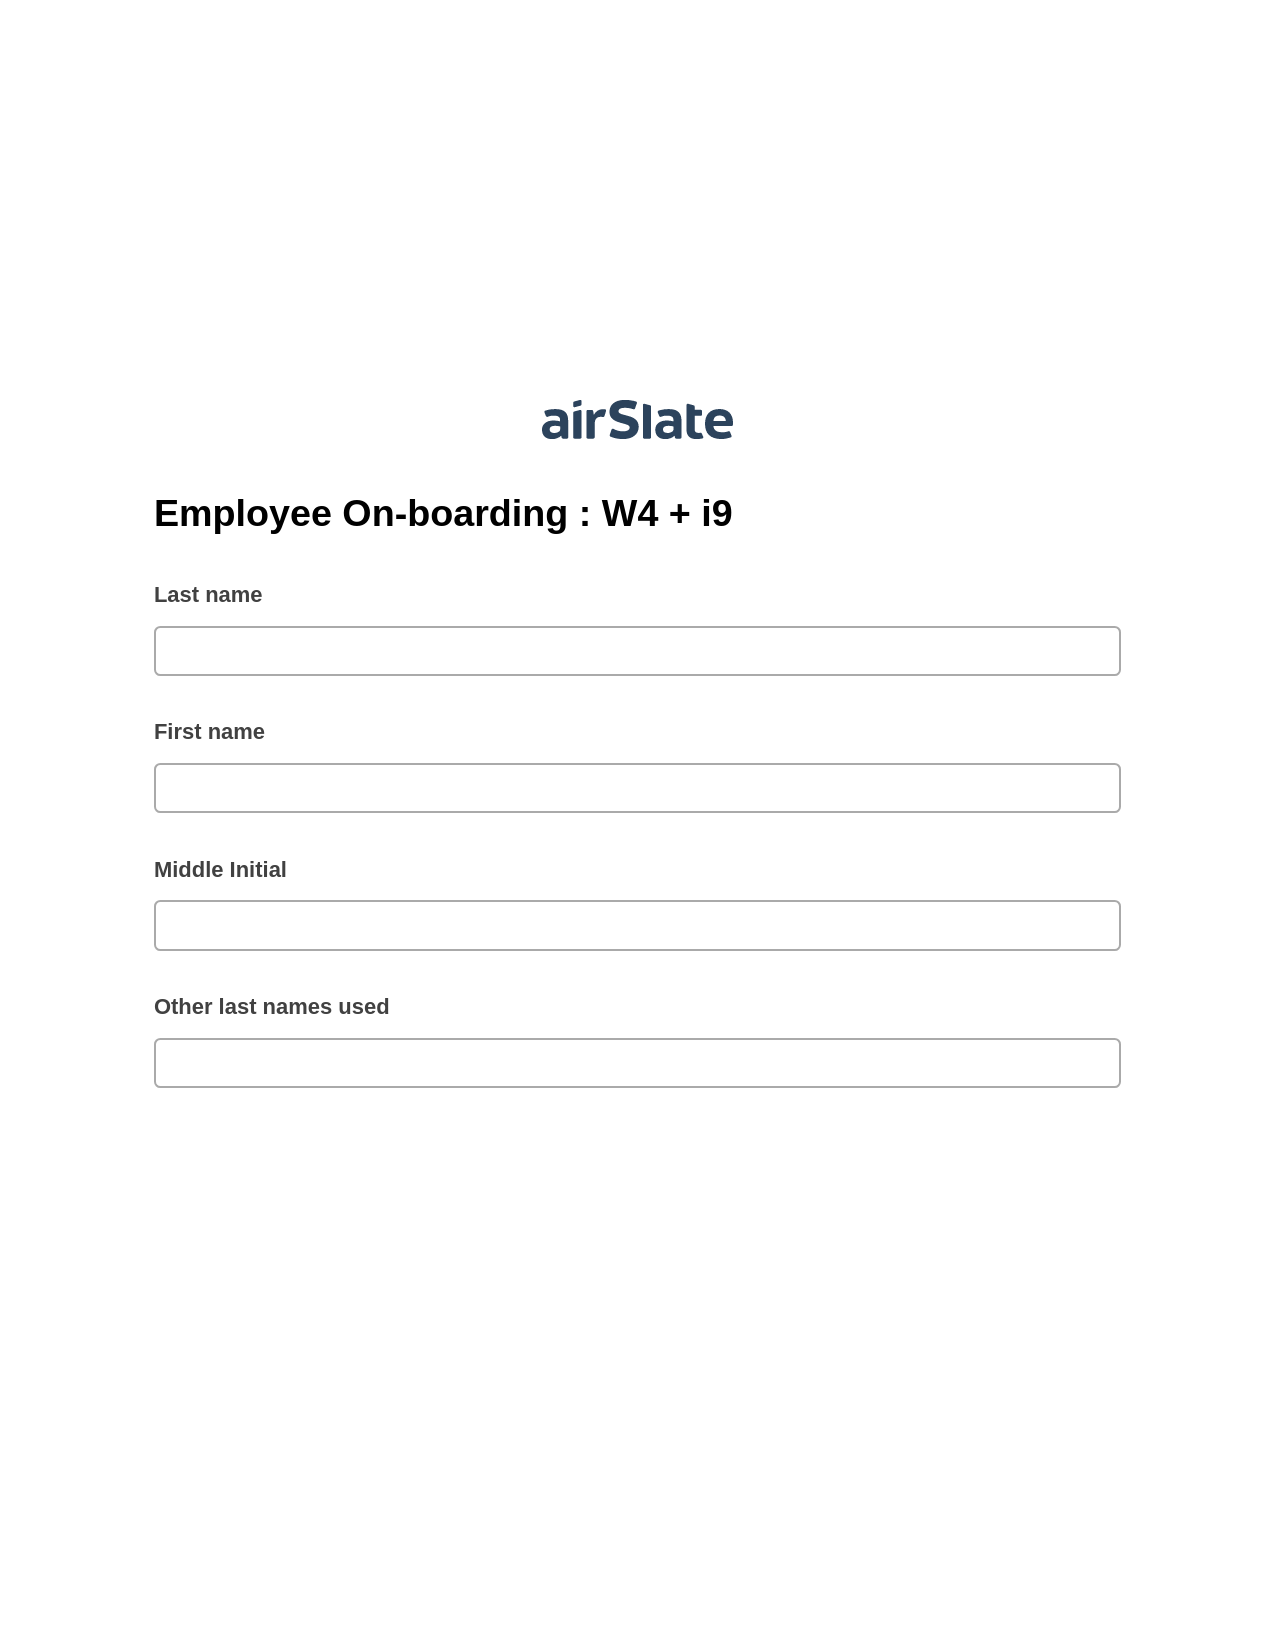 Employee On-boarding : W4 + i9 Pre-fill Slate from MS Dynamics 365 Records Bot, Create Slate Bot, Slack Notification Postfinish Bot